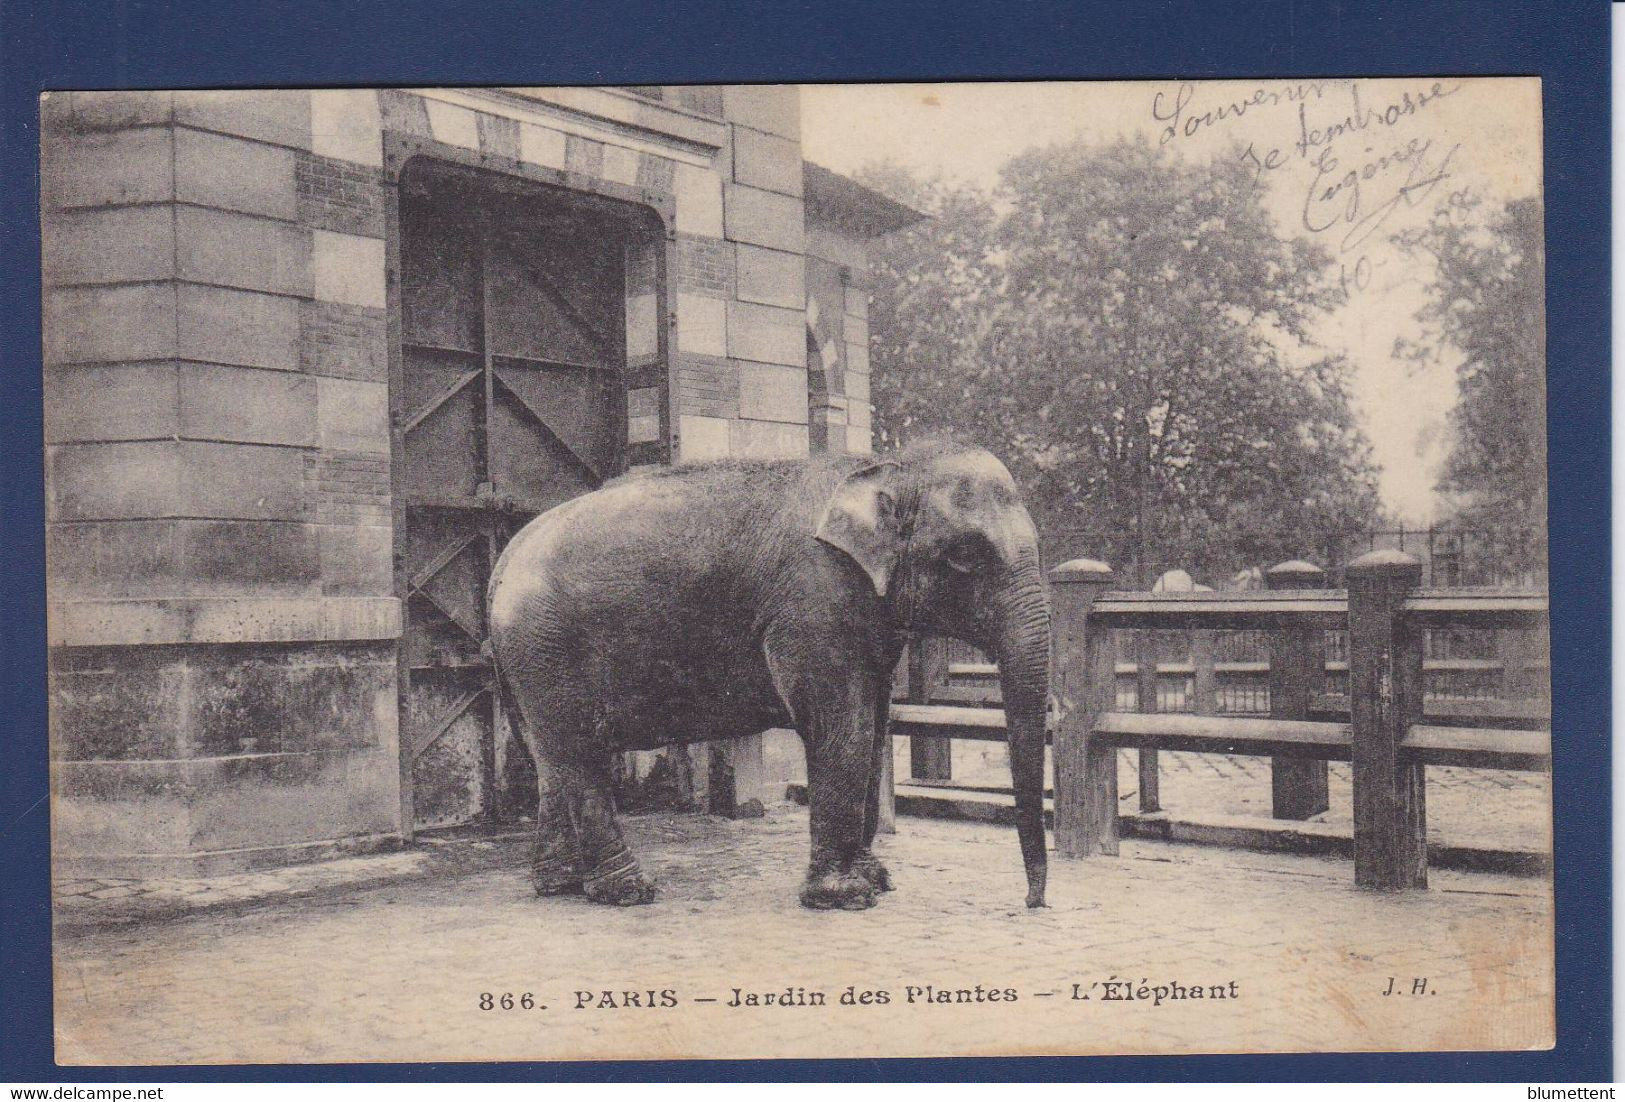 CPA éléphant écrite - Elephants